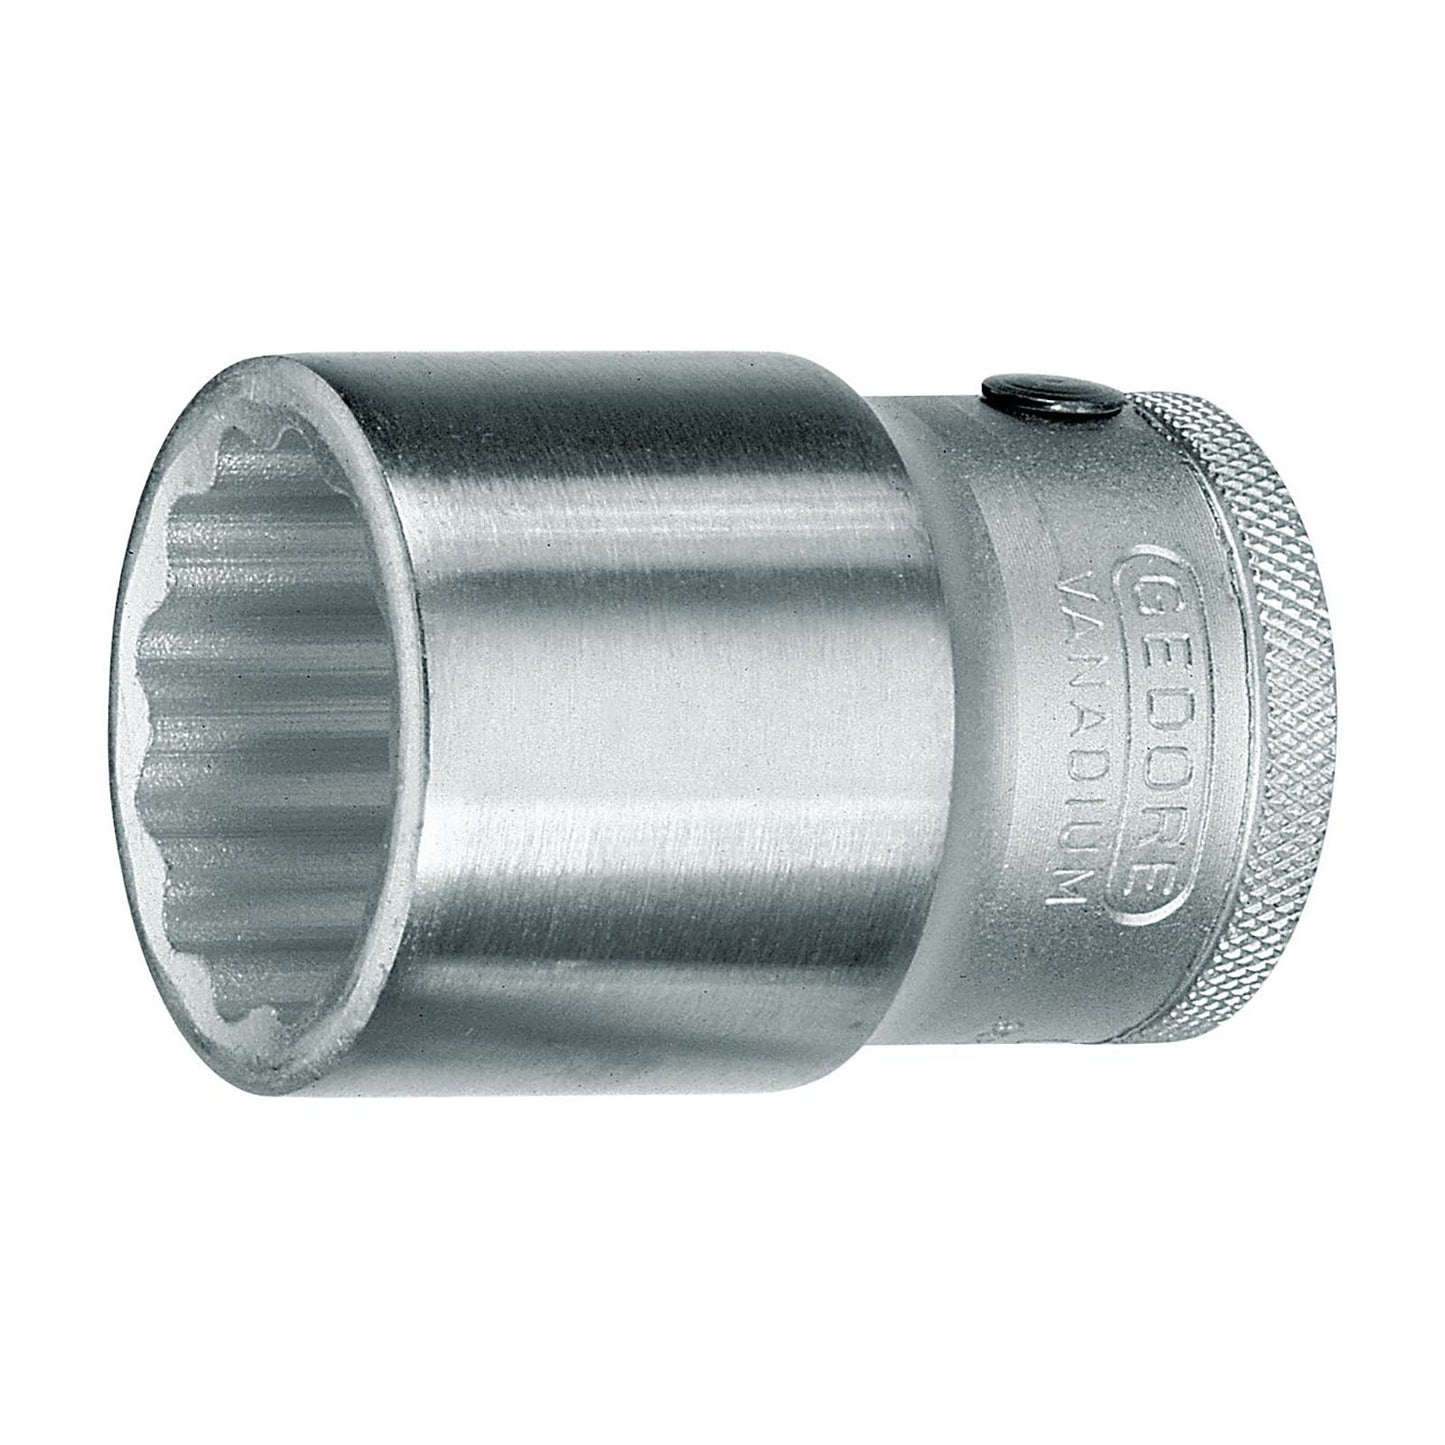 GEDORE D 32 27 - Vaso Unit Drive 3/4", 27 mm (6272400)